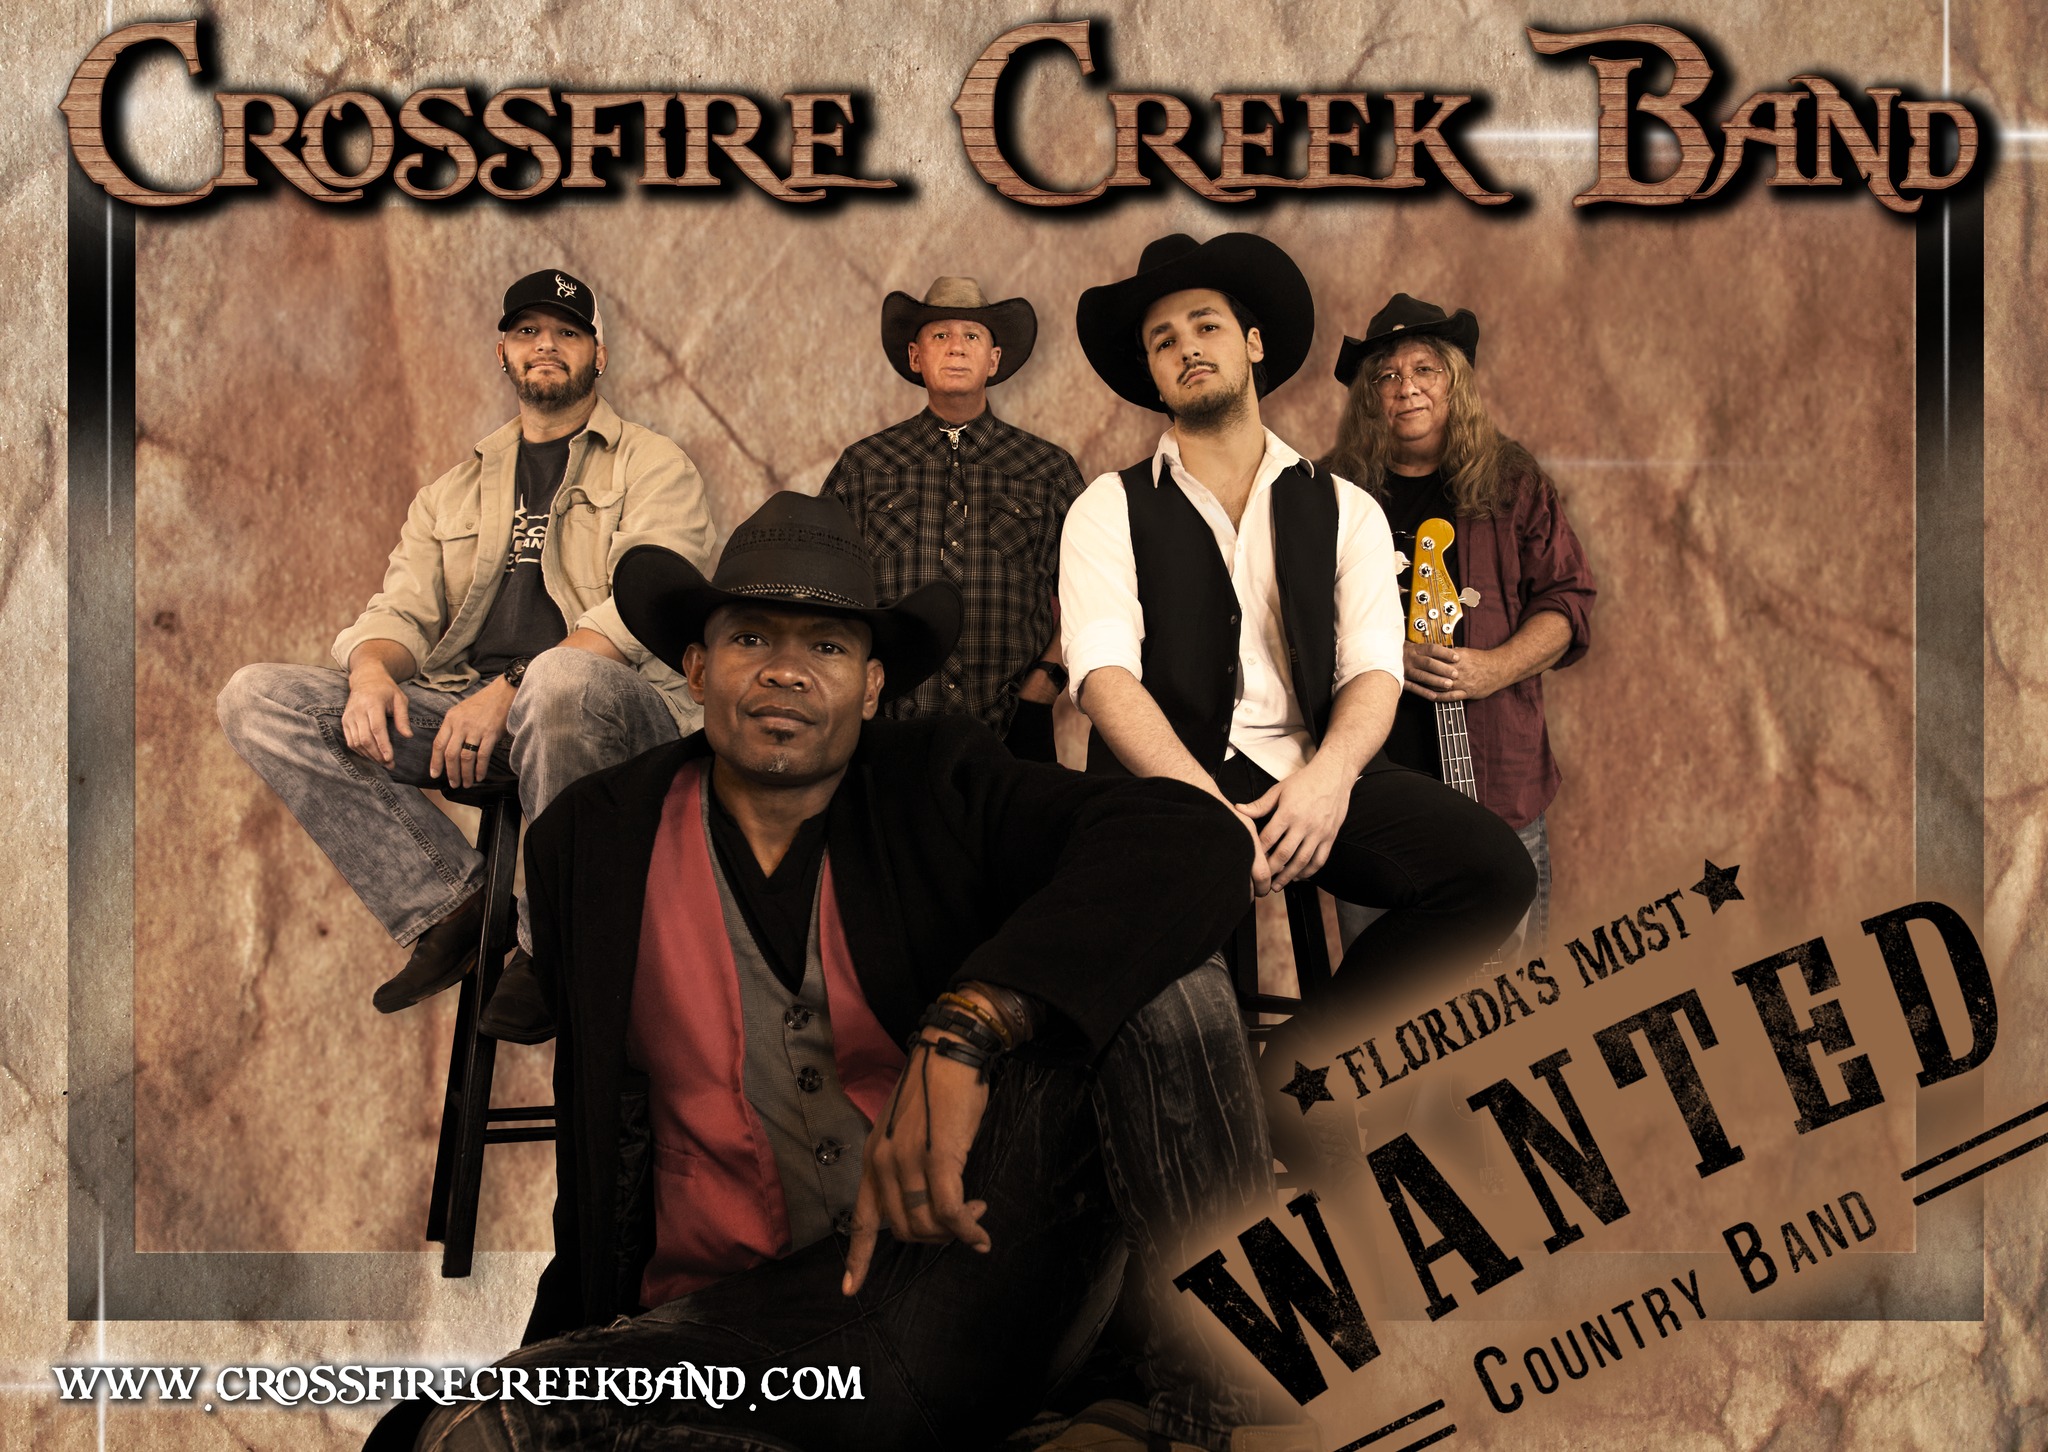 Crossfire Creek Band